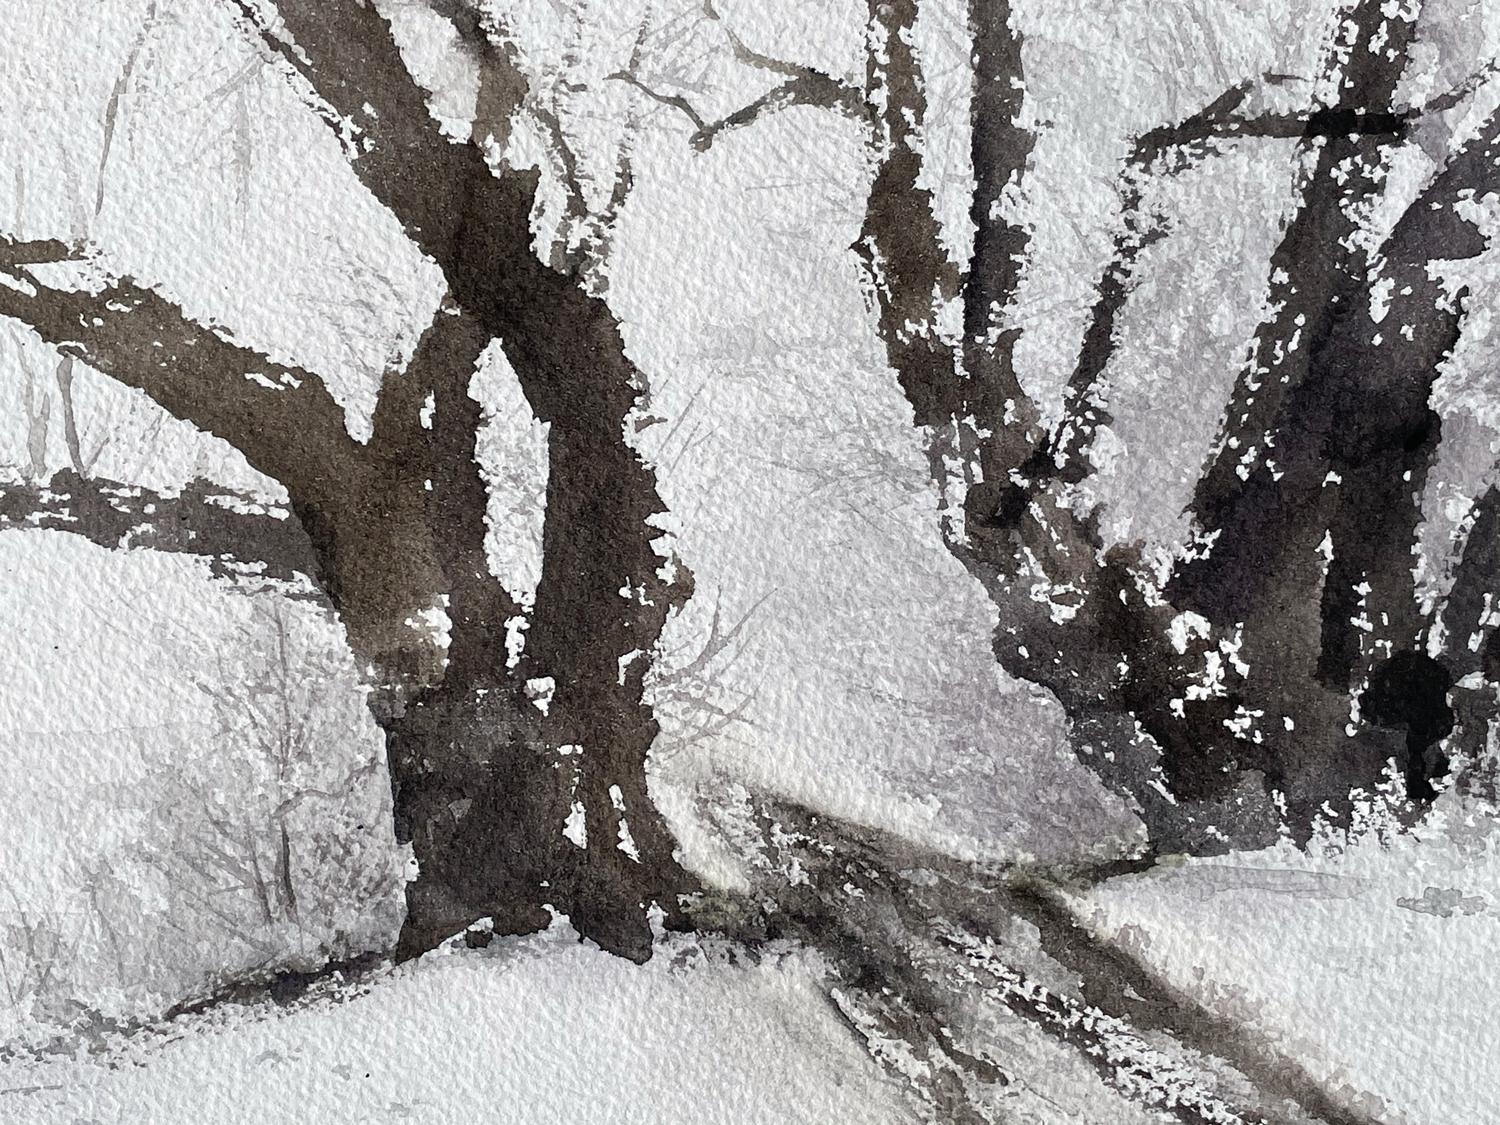 Poplars in Winter, Original Painting - Abstract Impressionist Art by Jill Poyerd